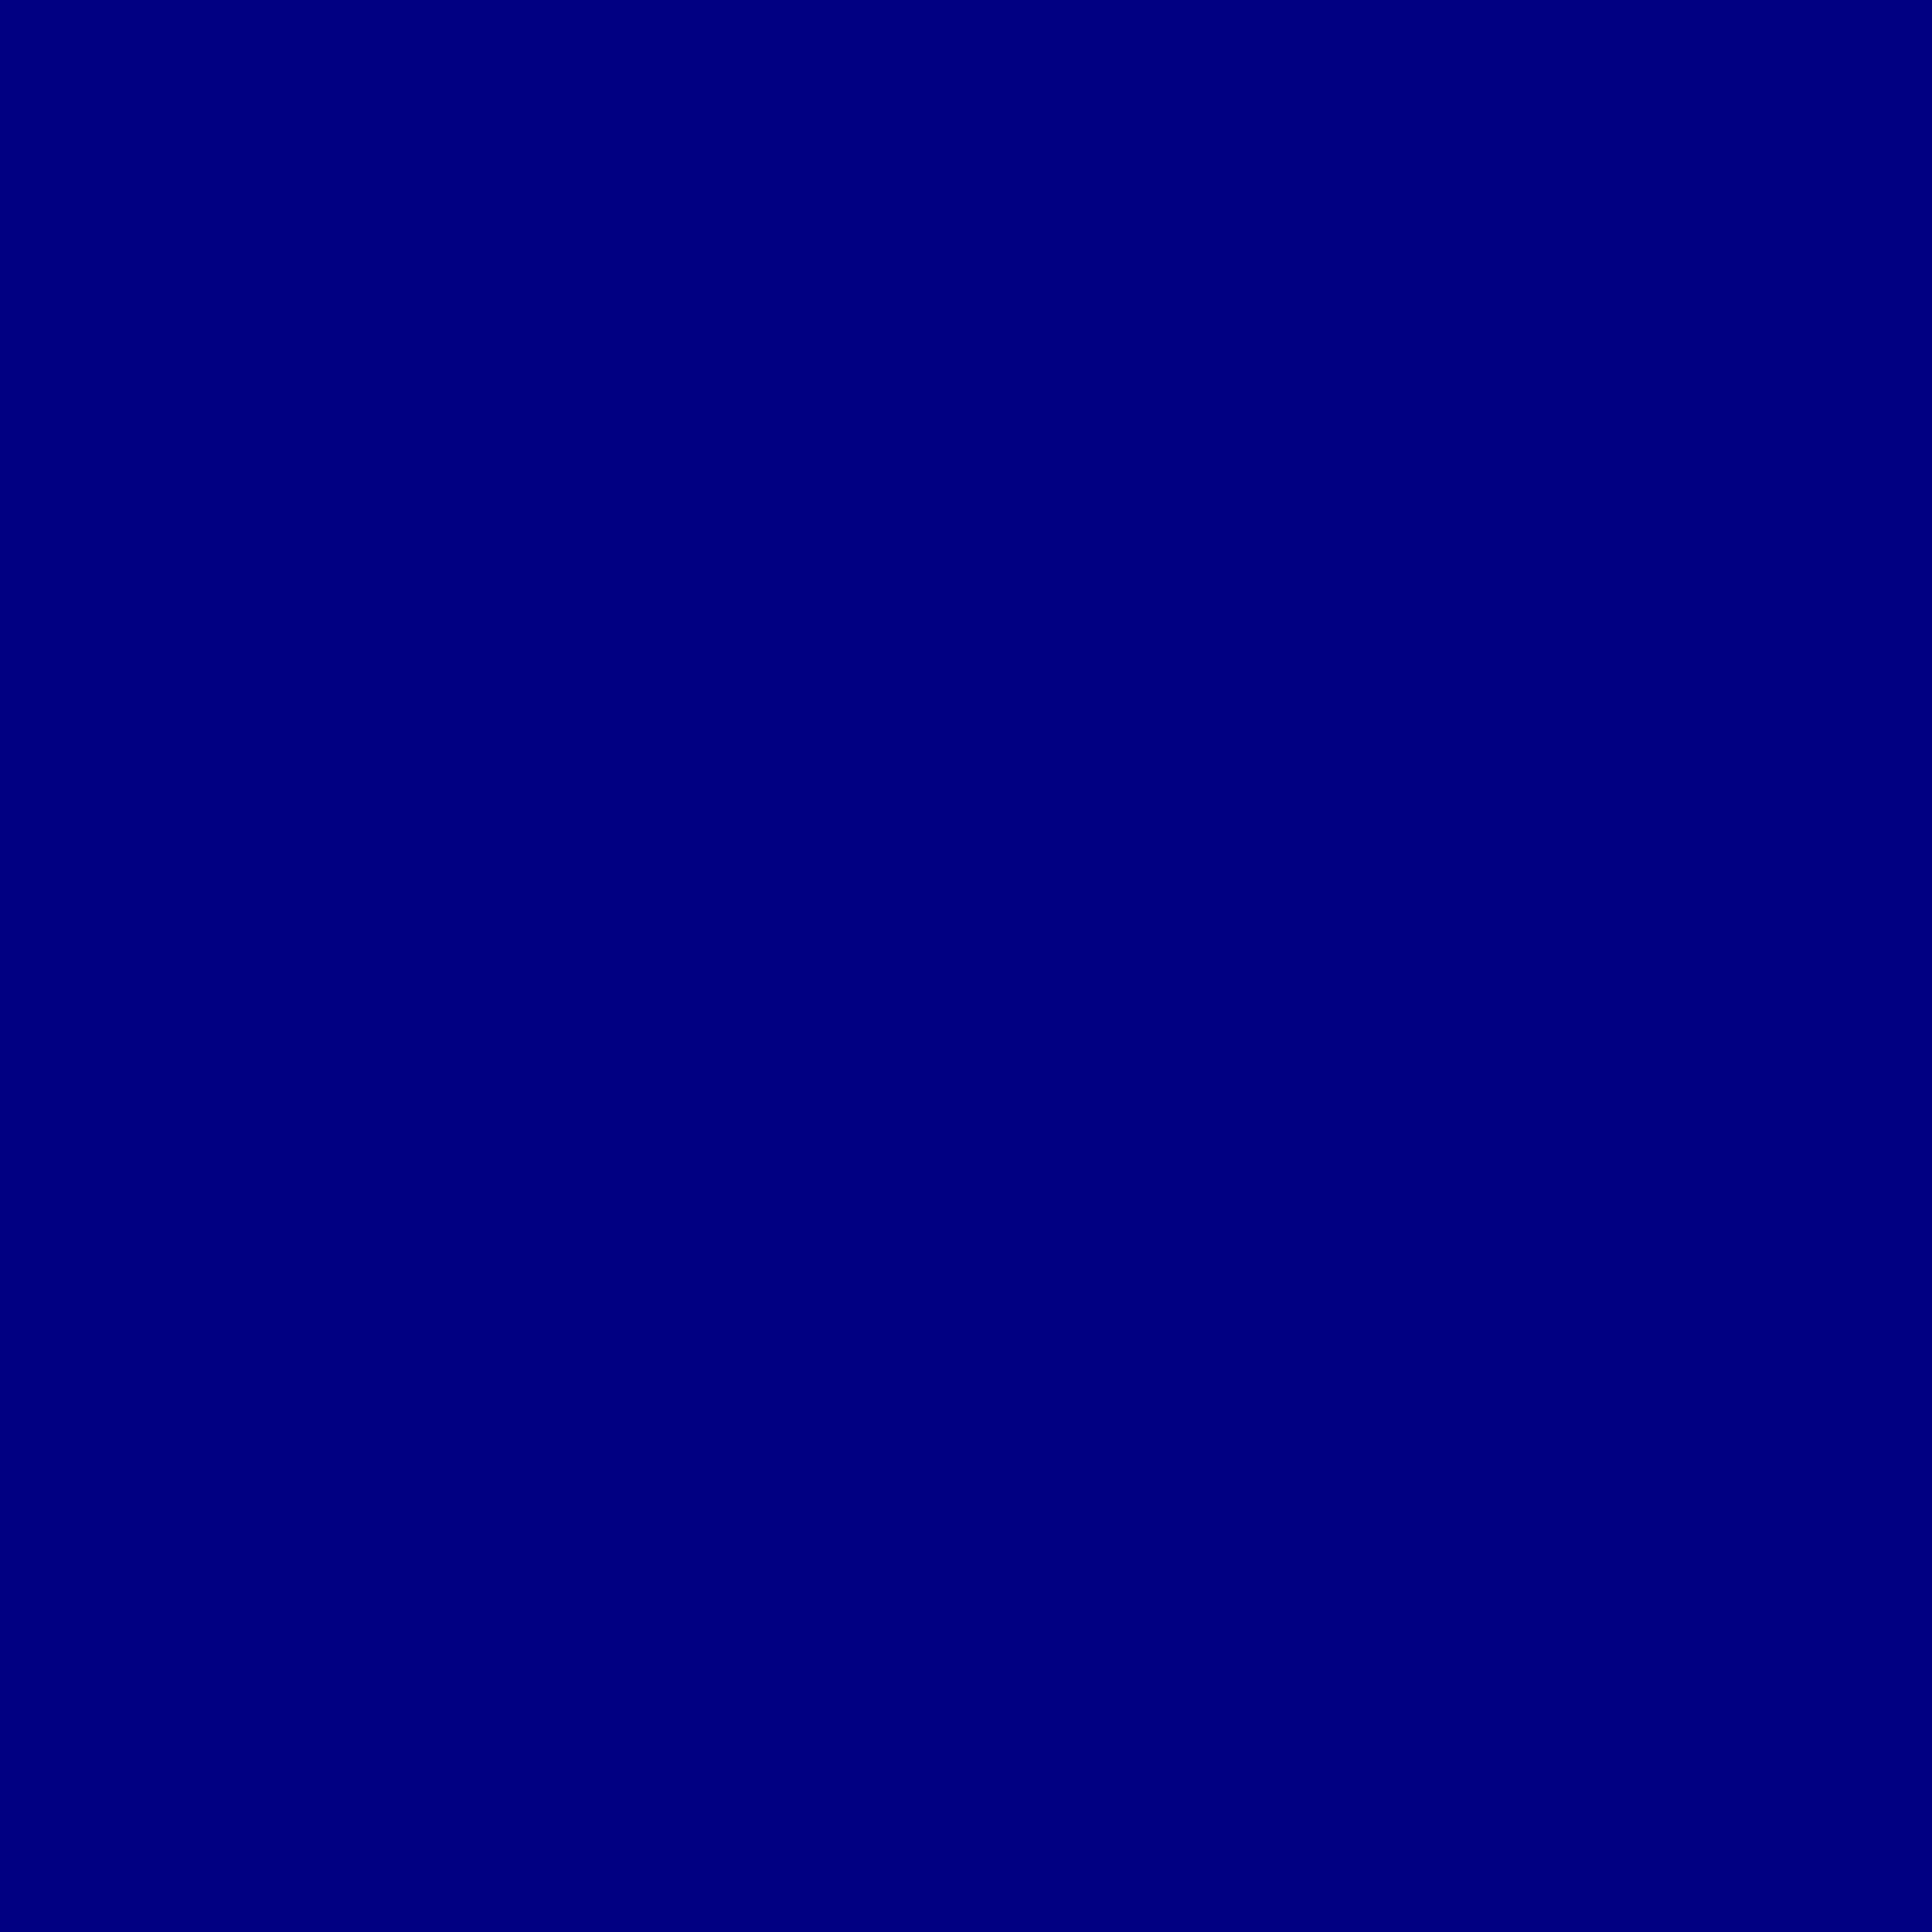 2048x2048 ... Navy Blue Solid Color Backgrou